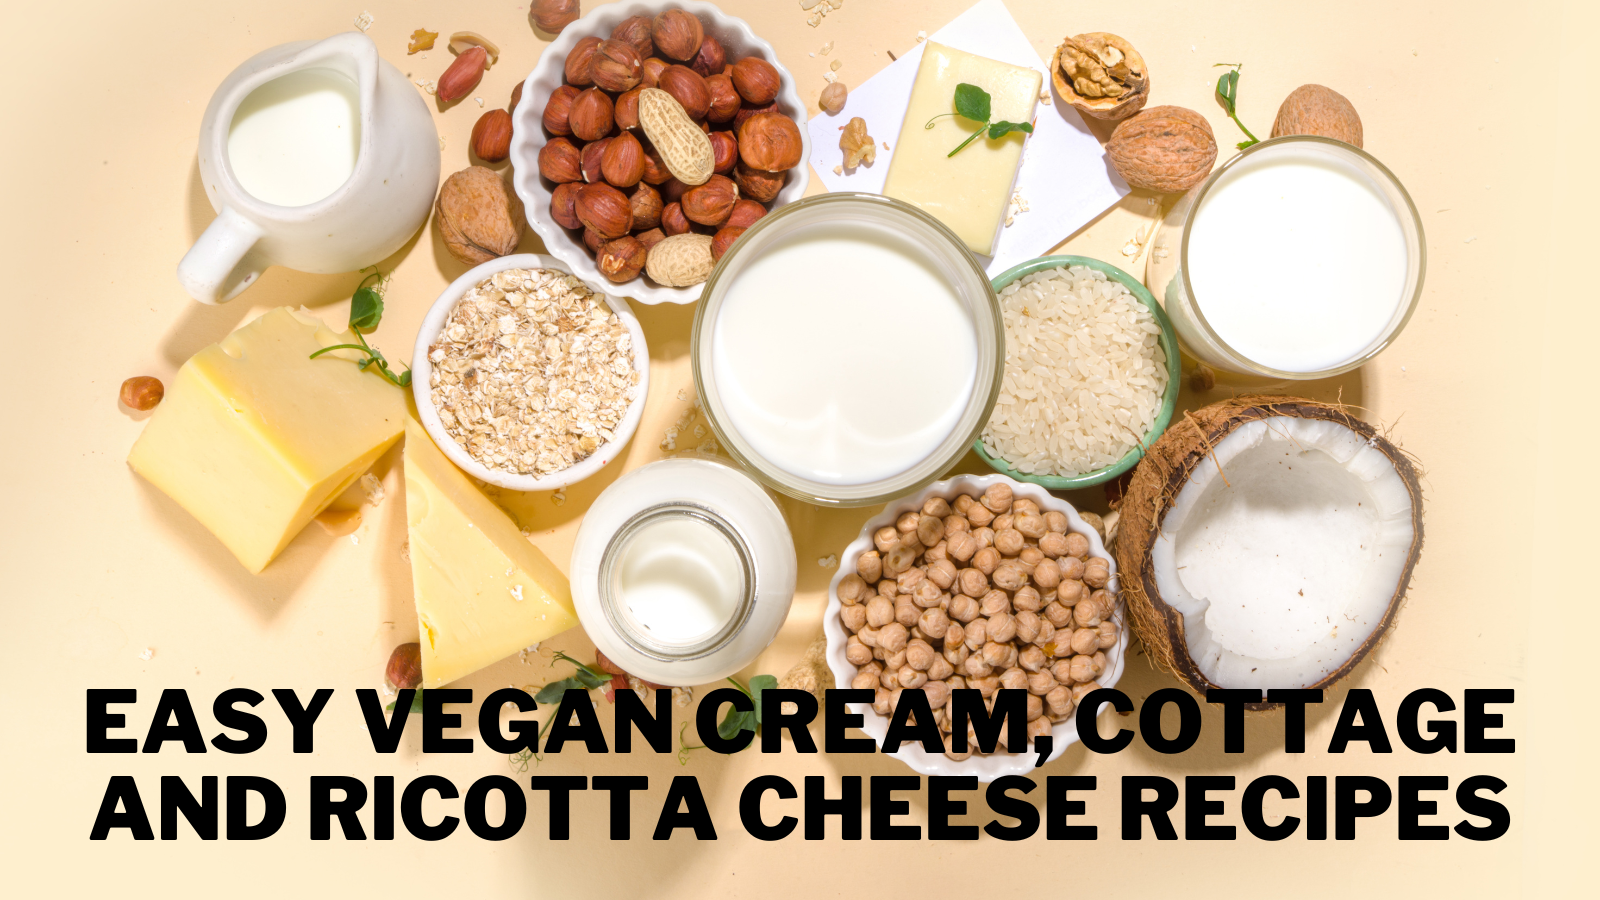 Easy Vegan Cream Cottage And Ricotta Cheese